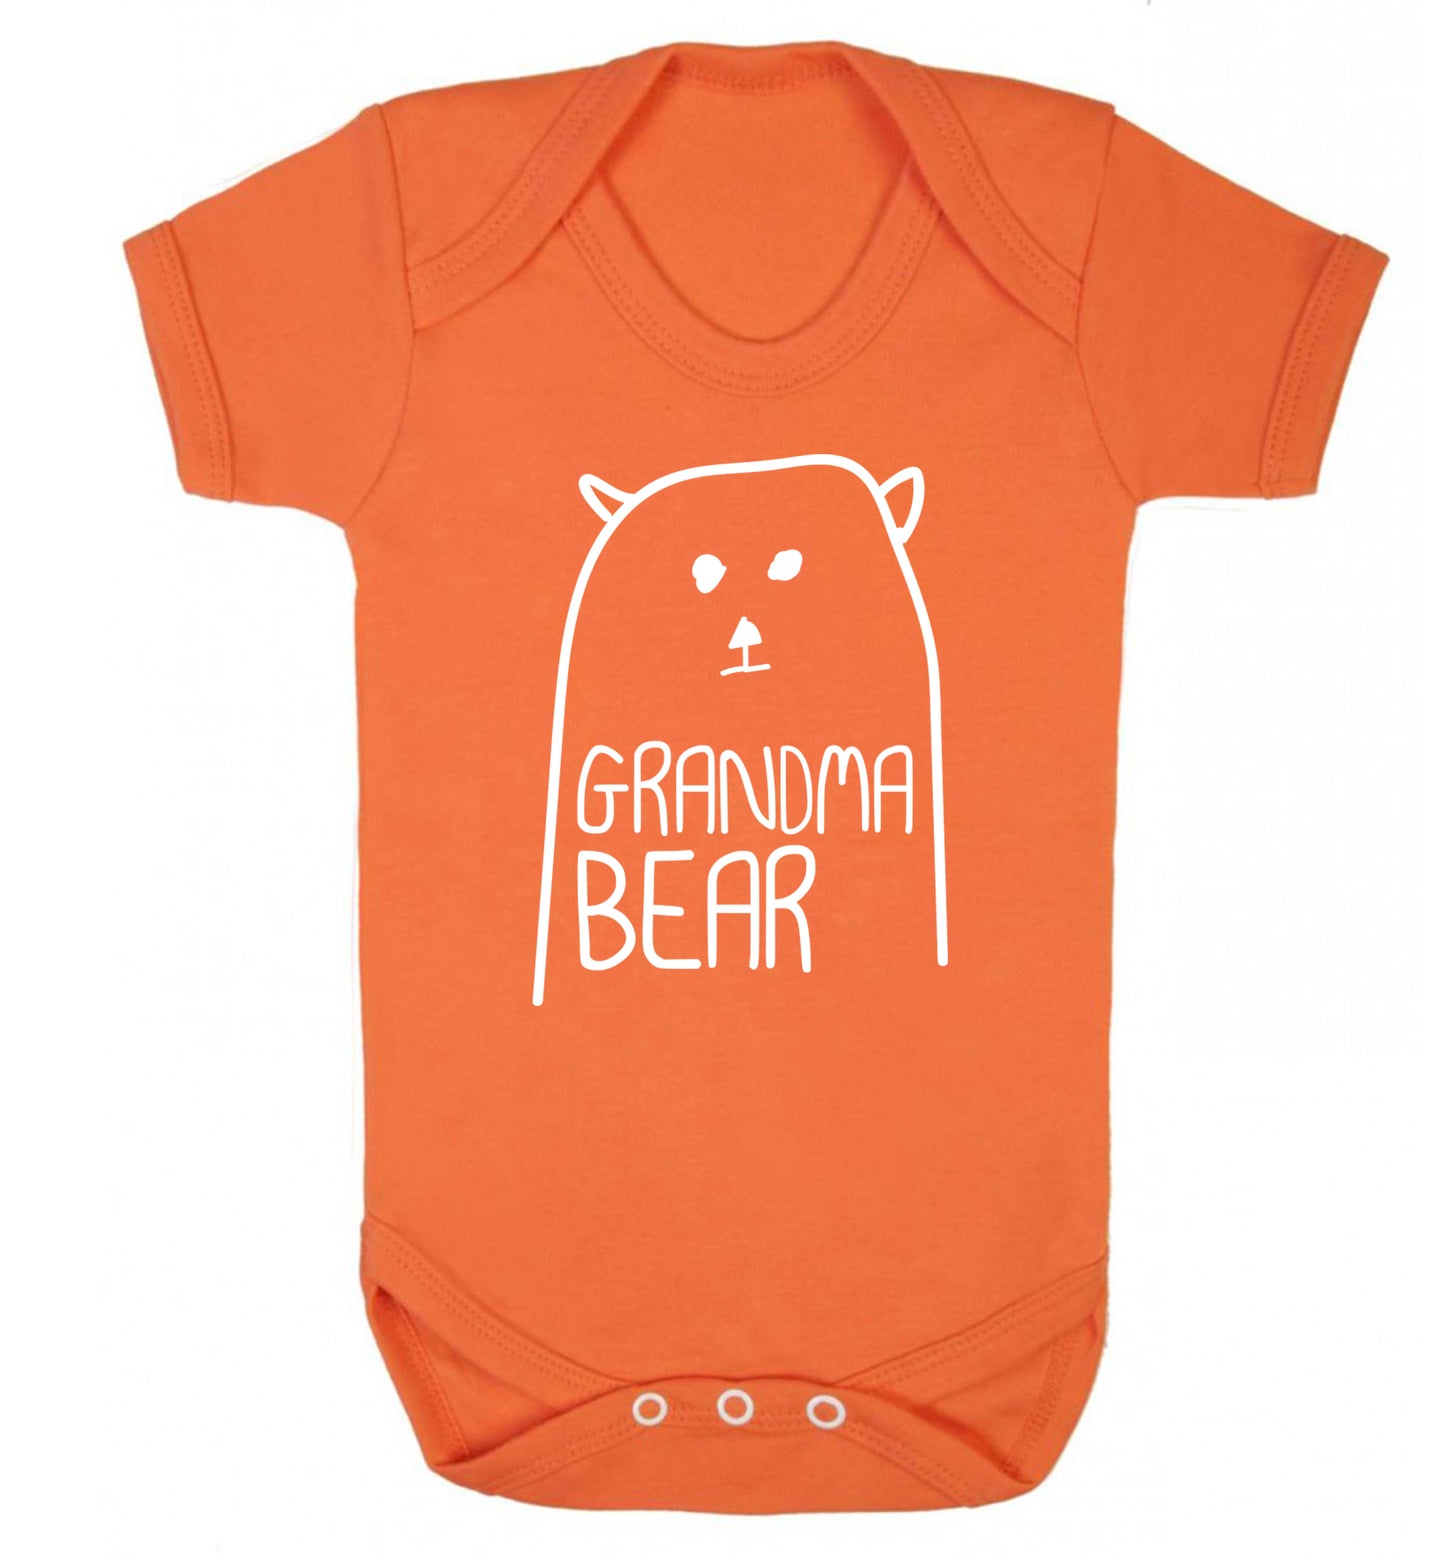 Grandma bear Baby Vest orange 18-24 months